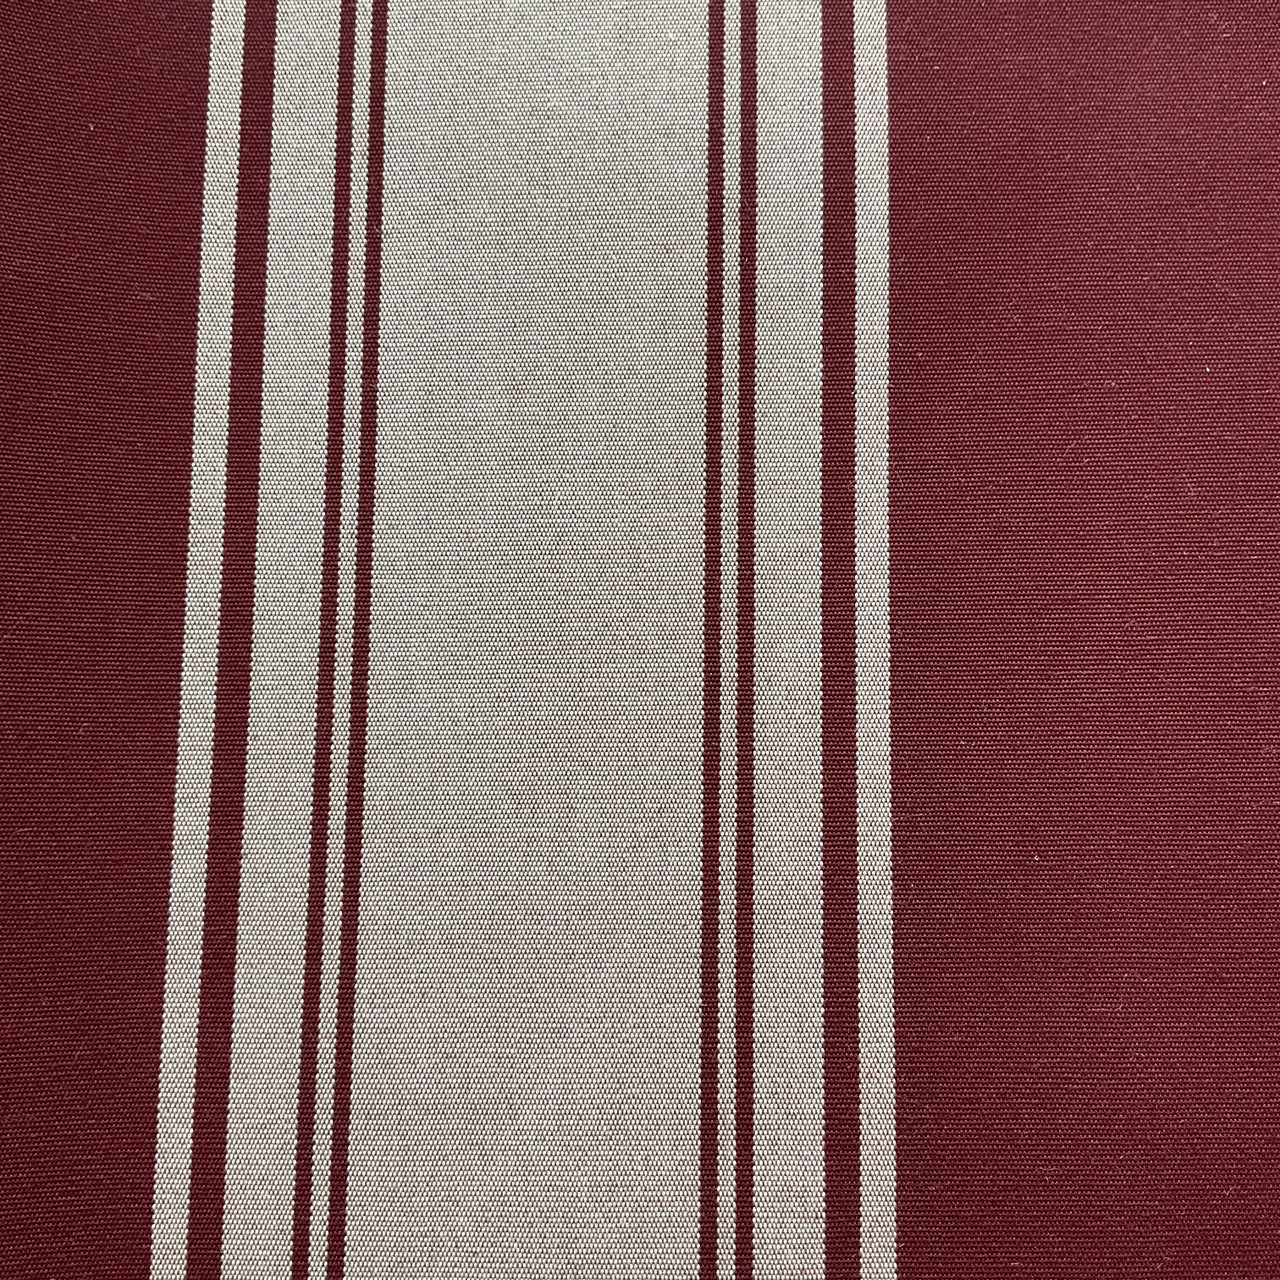 Sunbrella 46 Stripes Standard 4798 Burgundy/blk/white Outdoor Fabric by The Yard